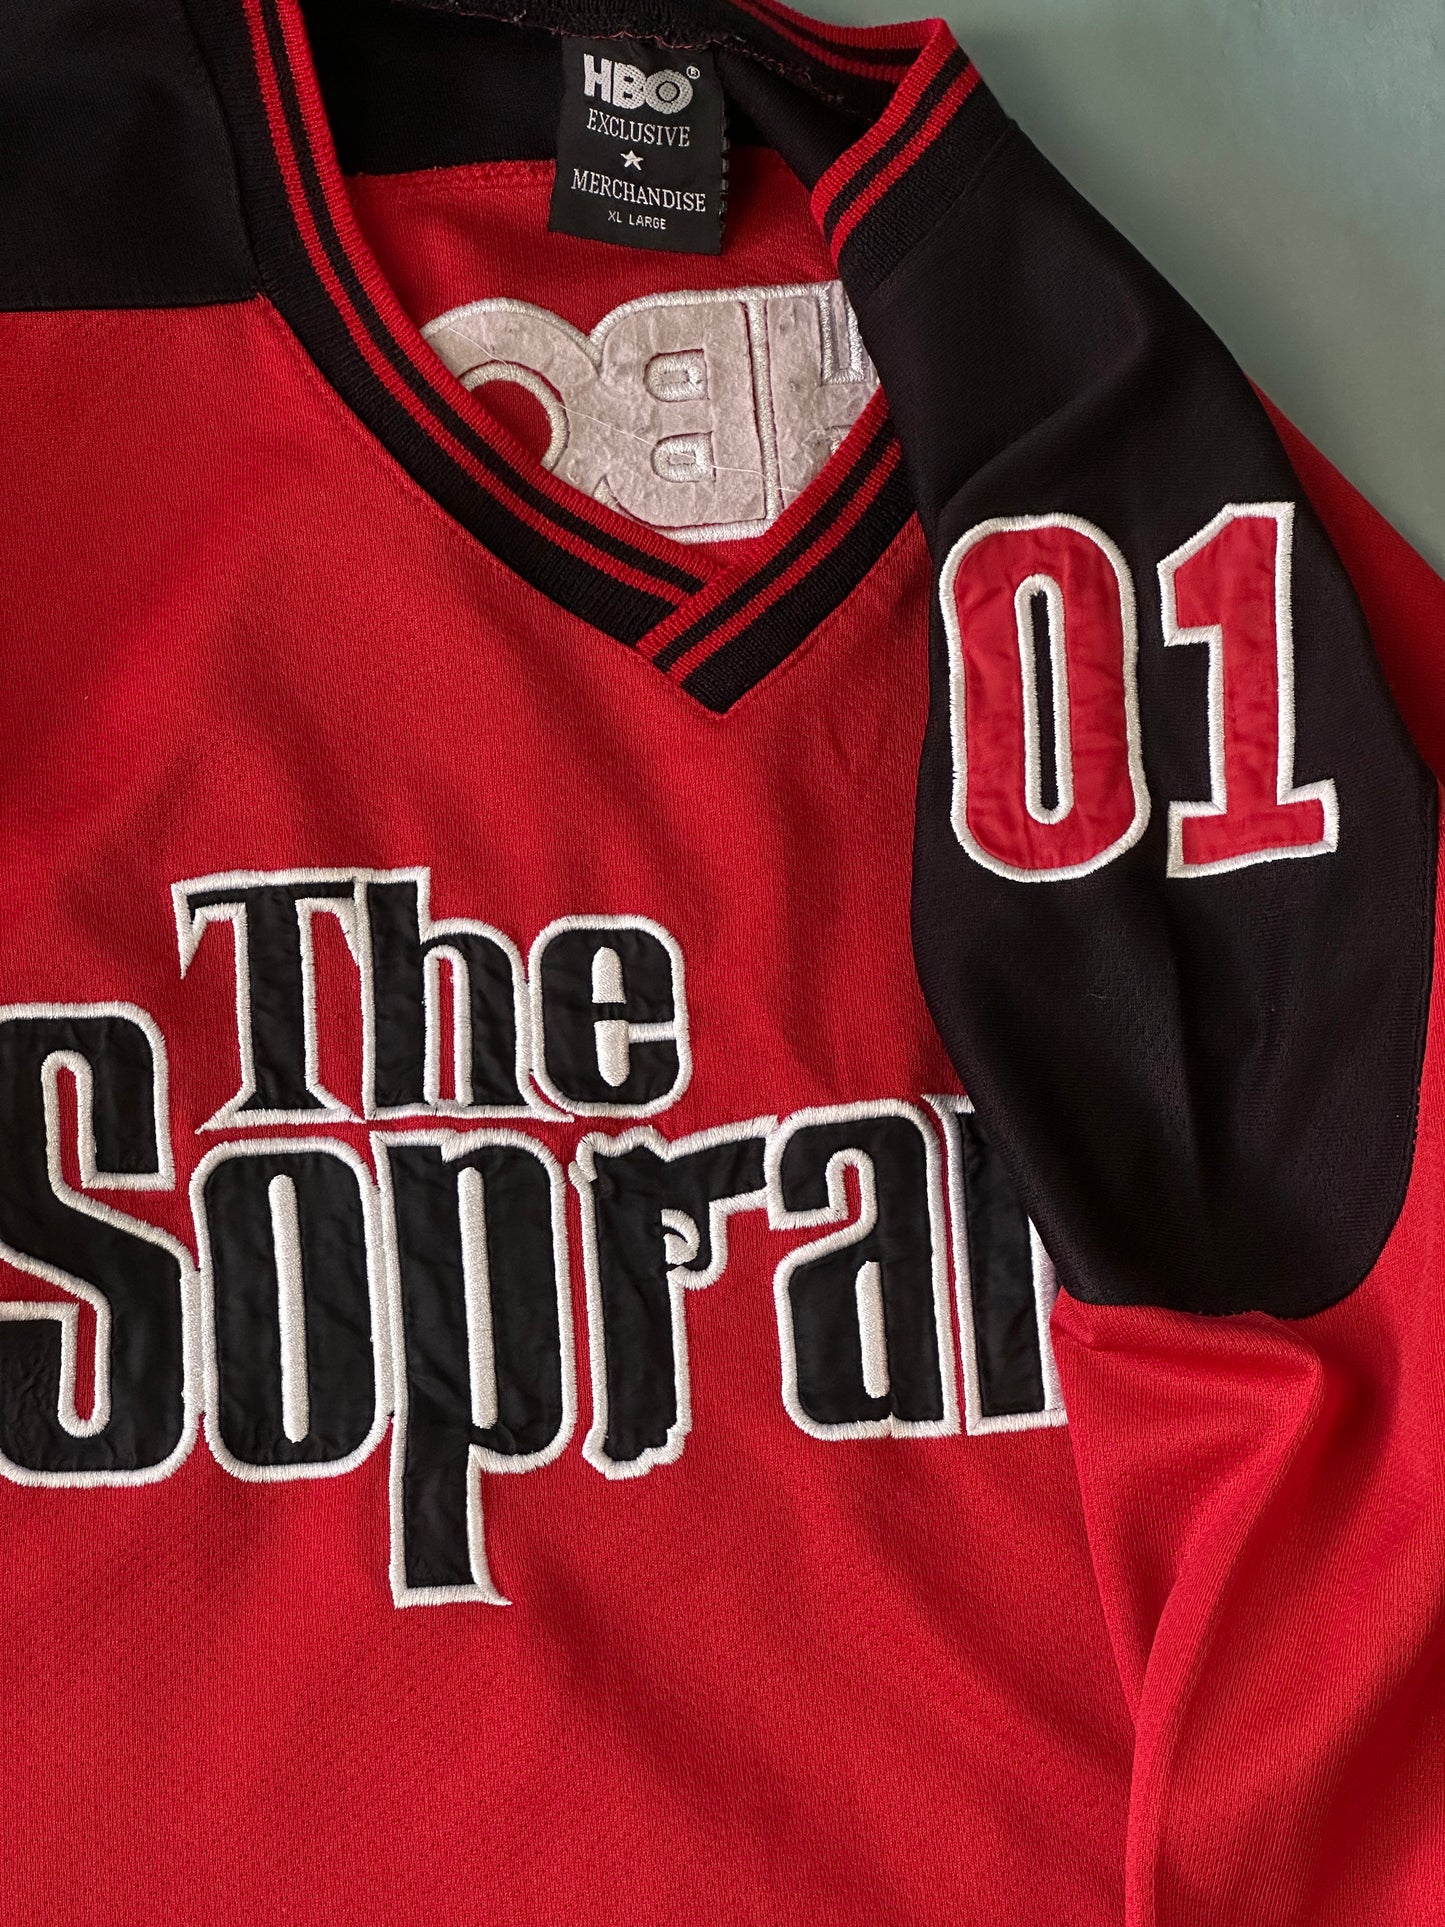 The Sopranos Vintage 2001 Jersey - XL